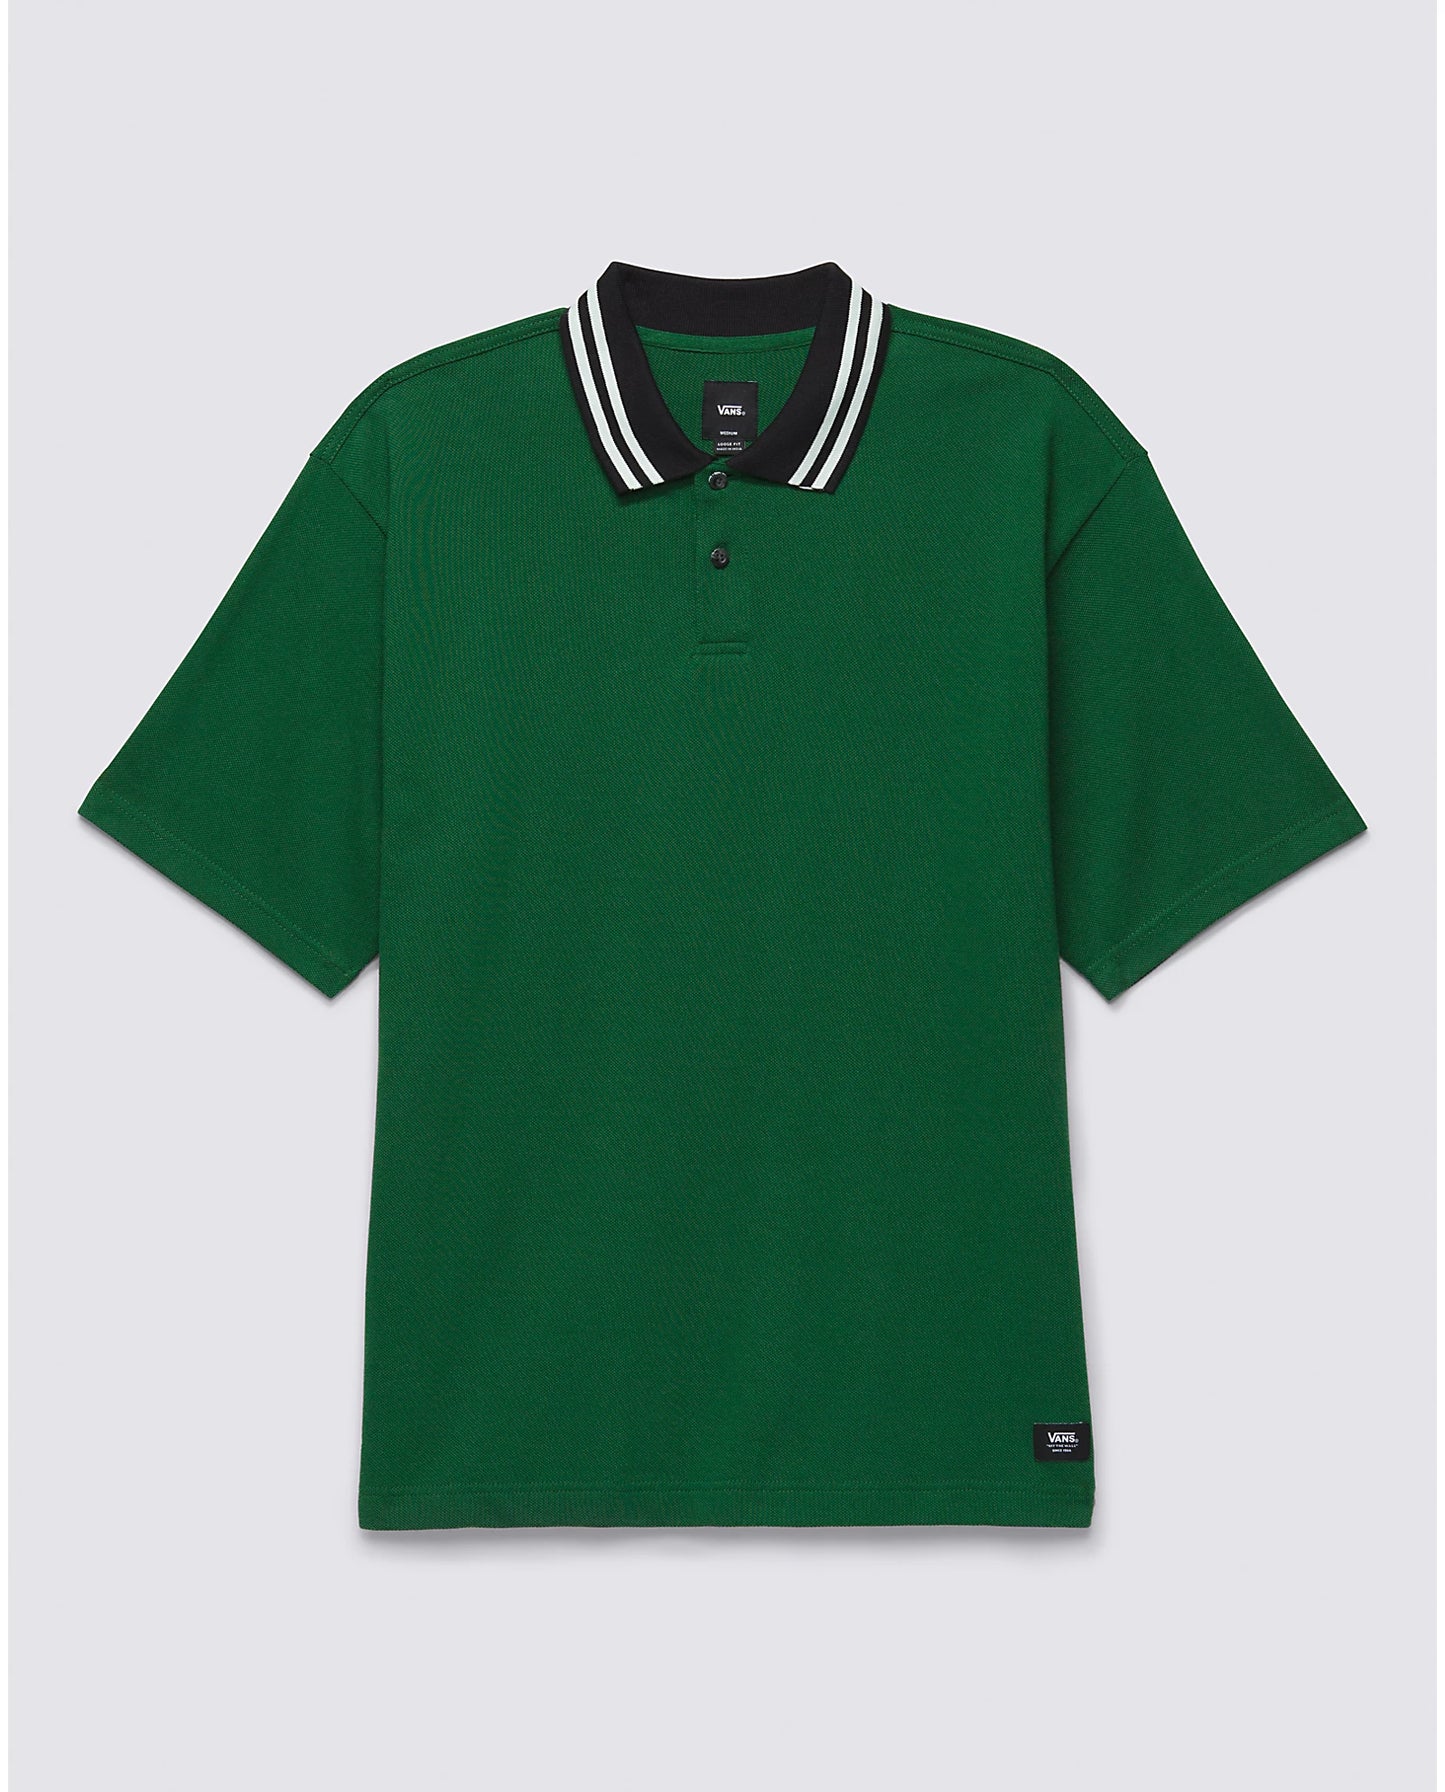 Penn Polo S/S Shirt Eden Grn(size options listed)